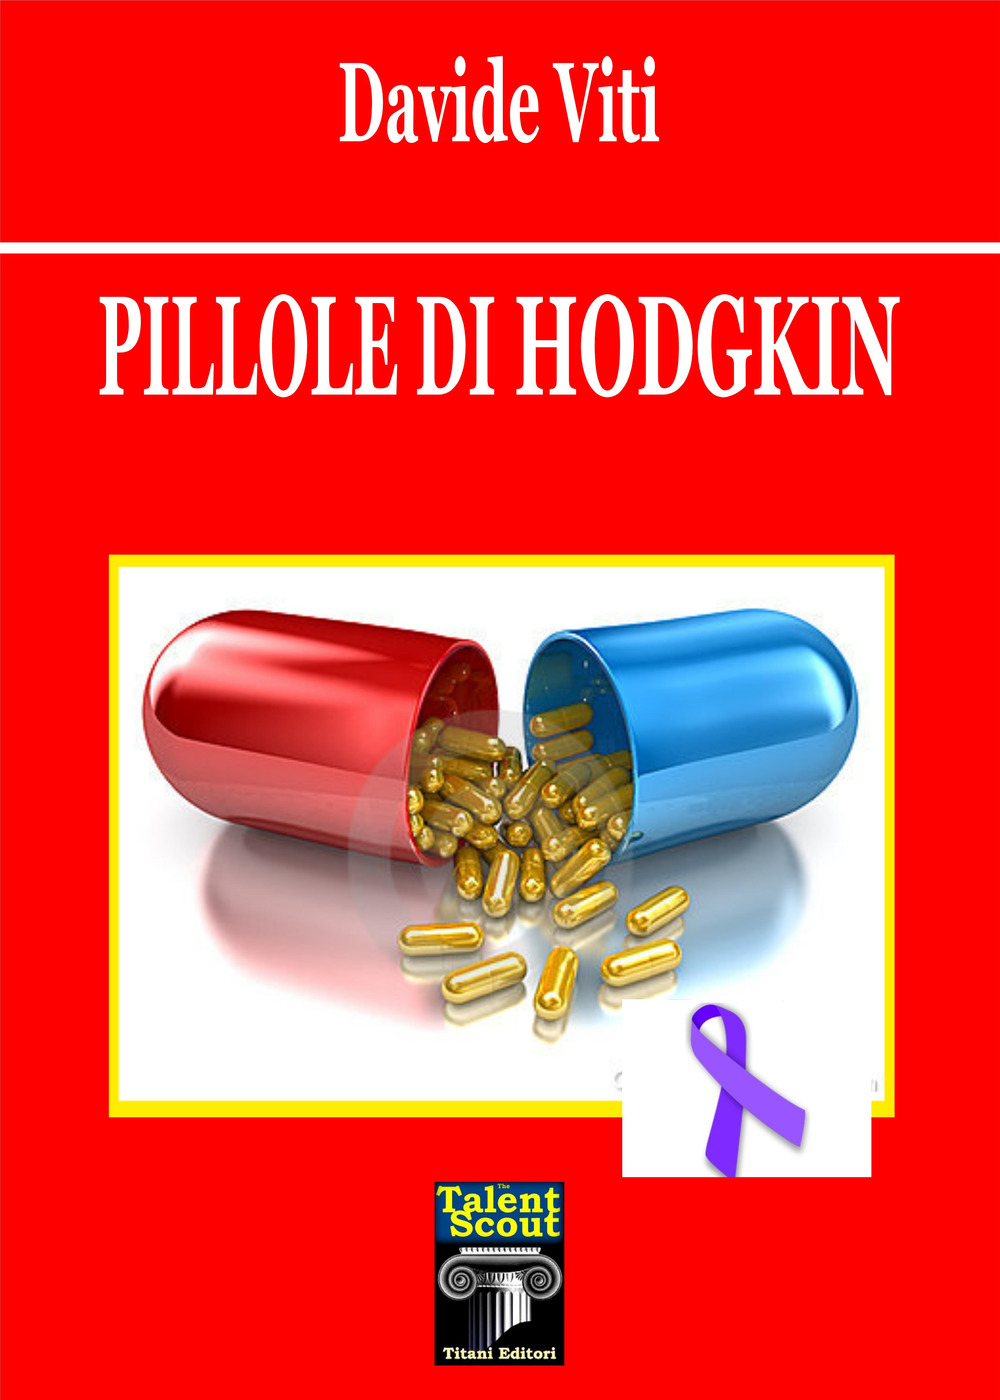 Pillole di Hodgkin